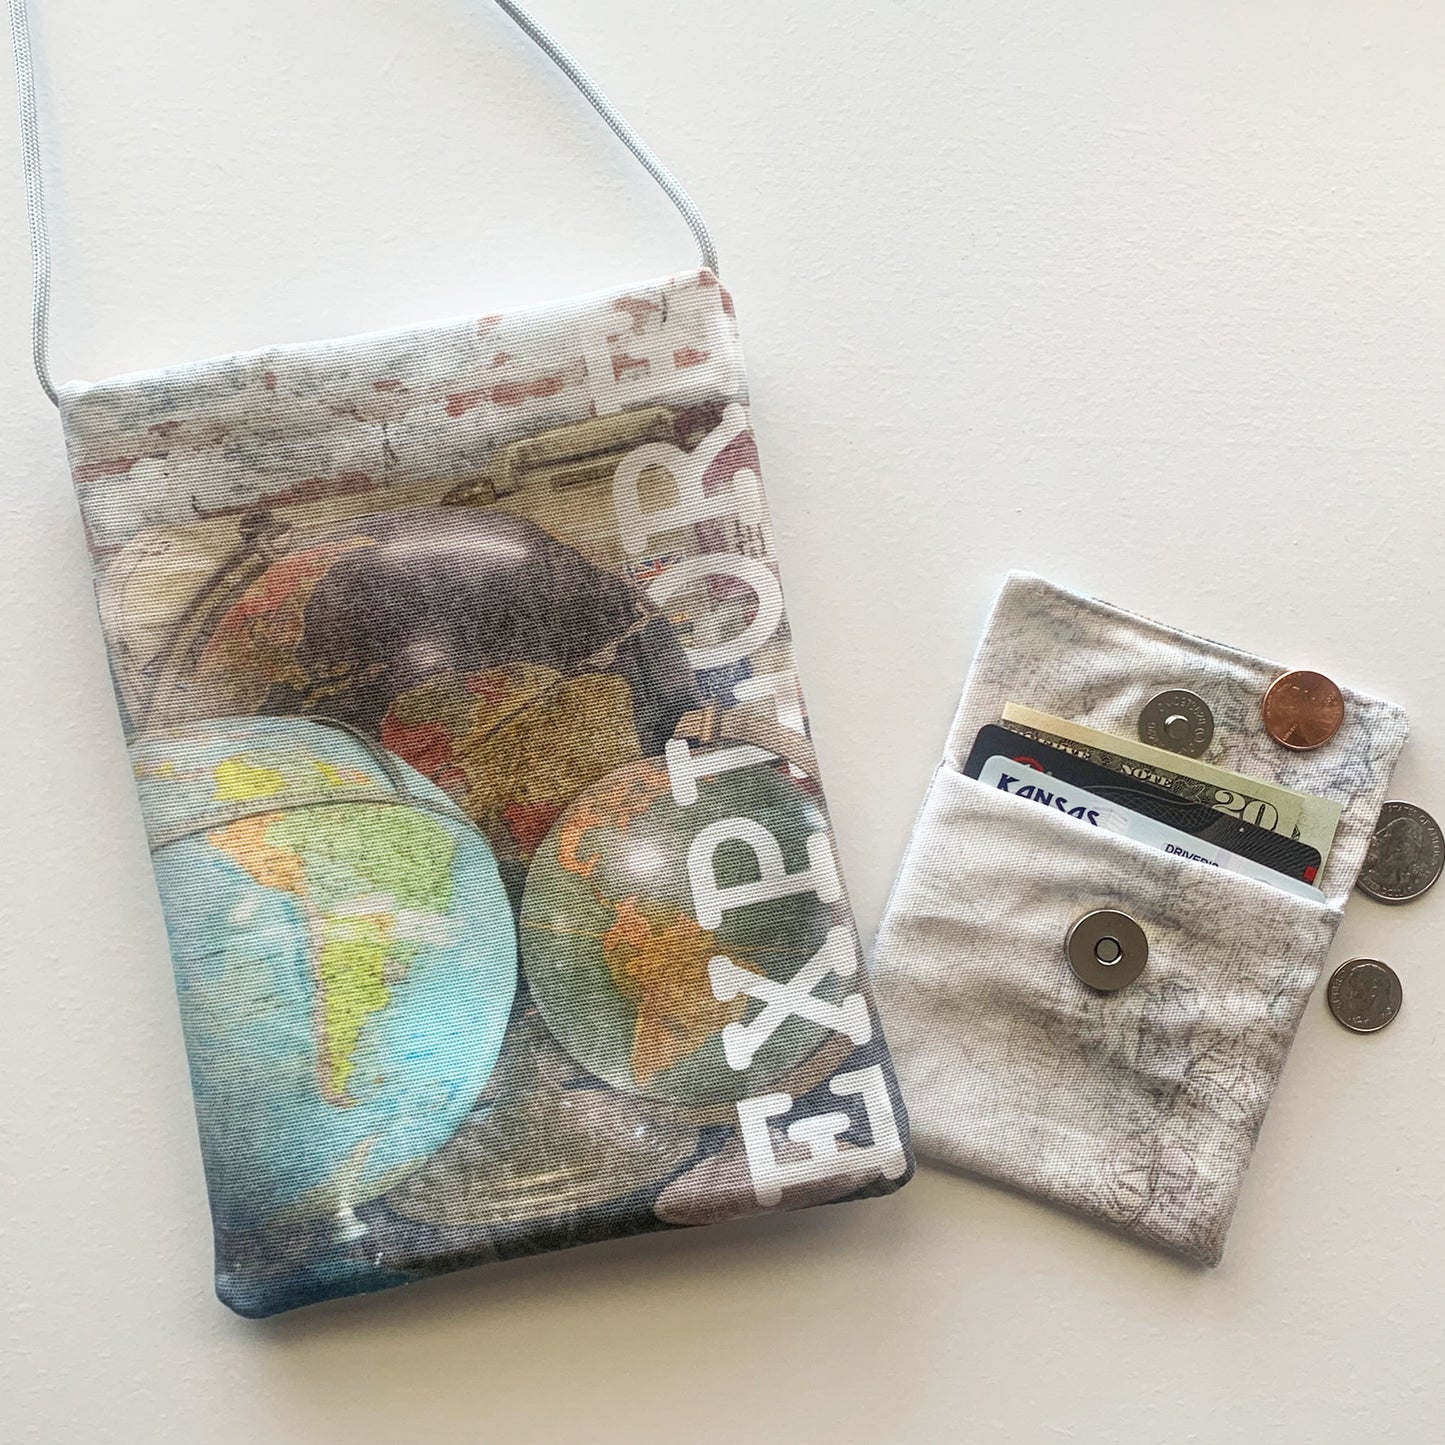 EMILY - Handmade purse with travel theme